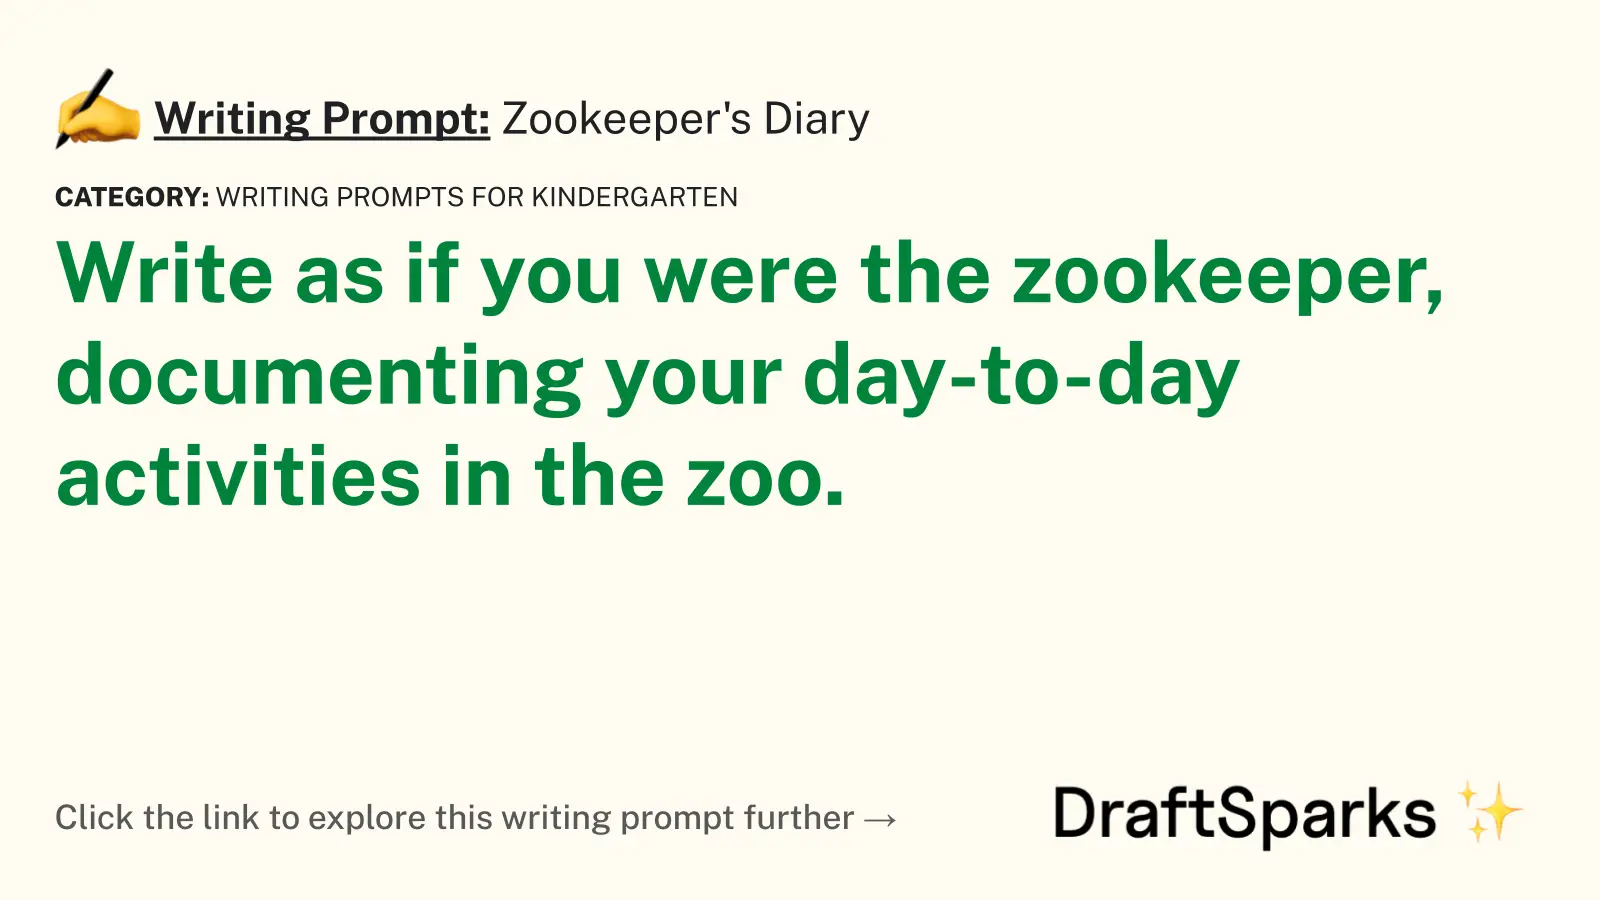 Zookeeper’s Diary